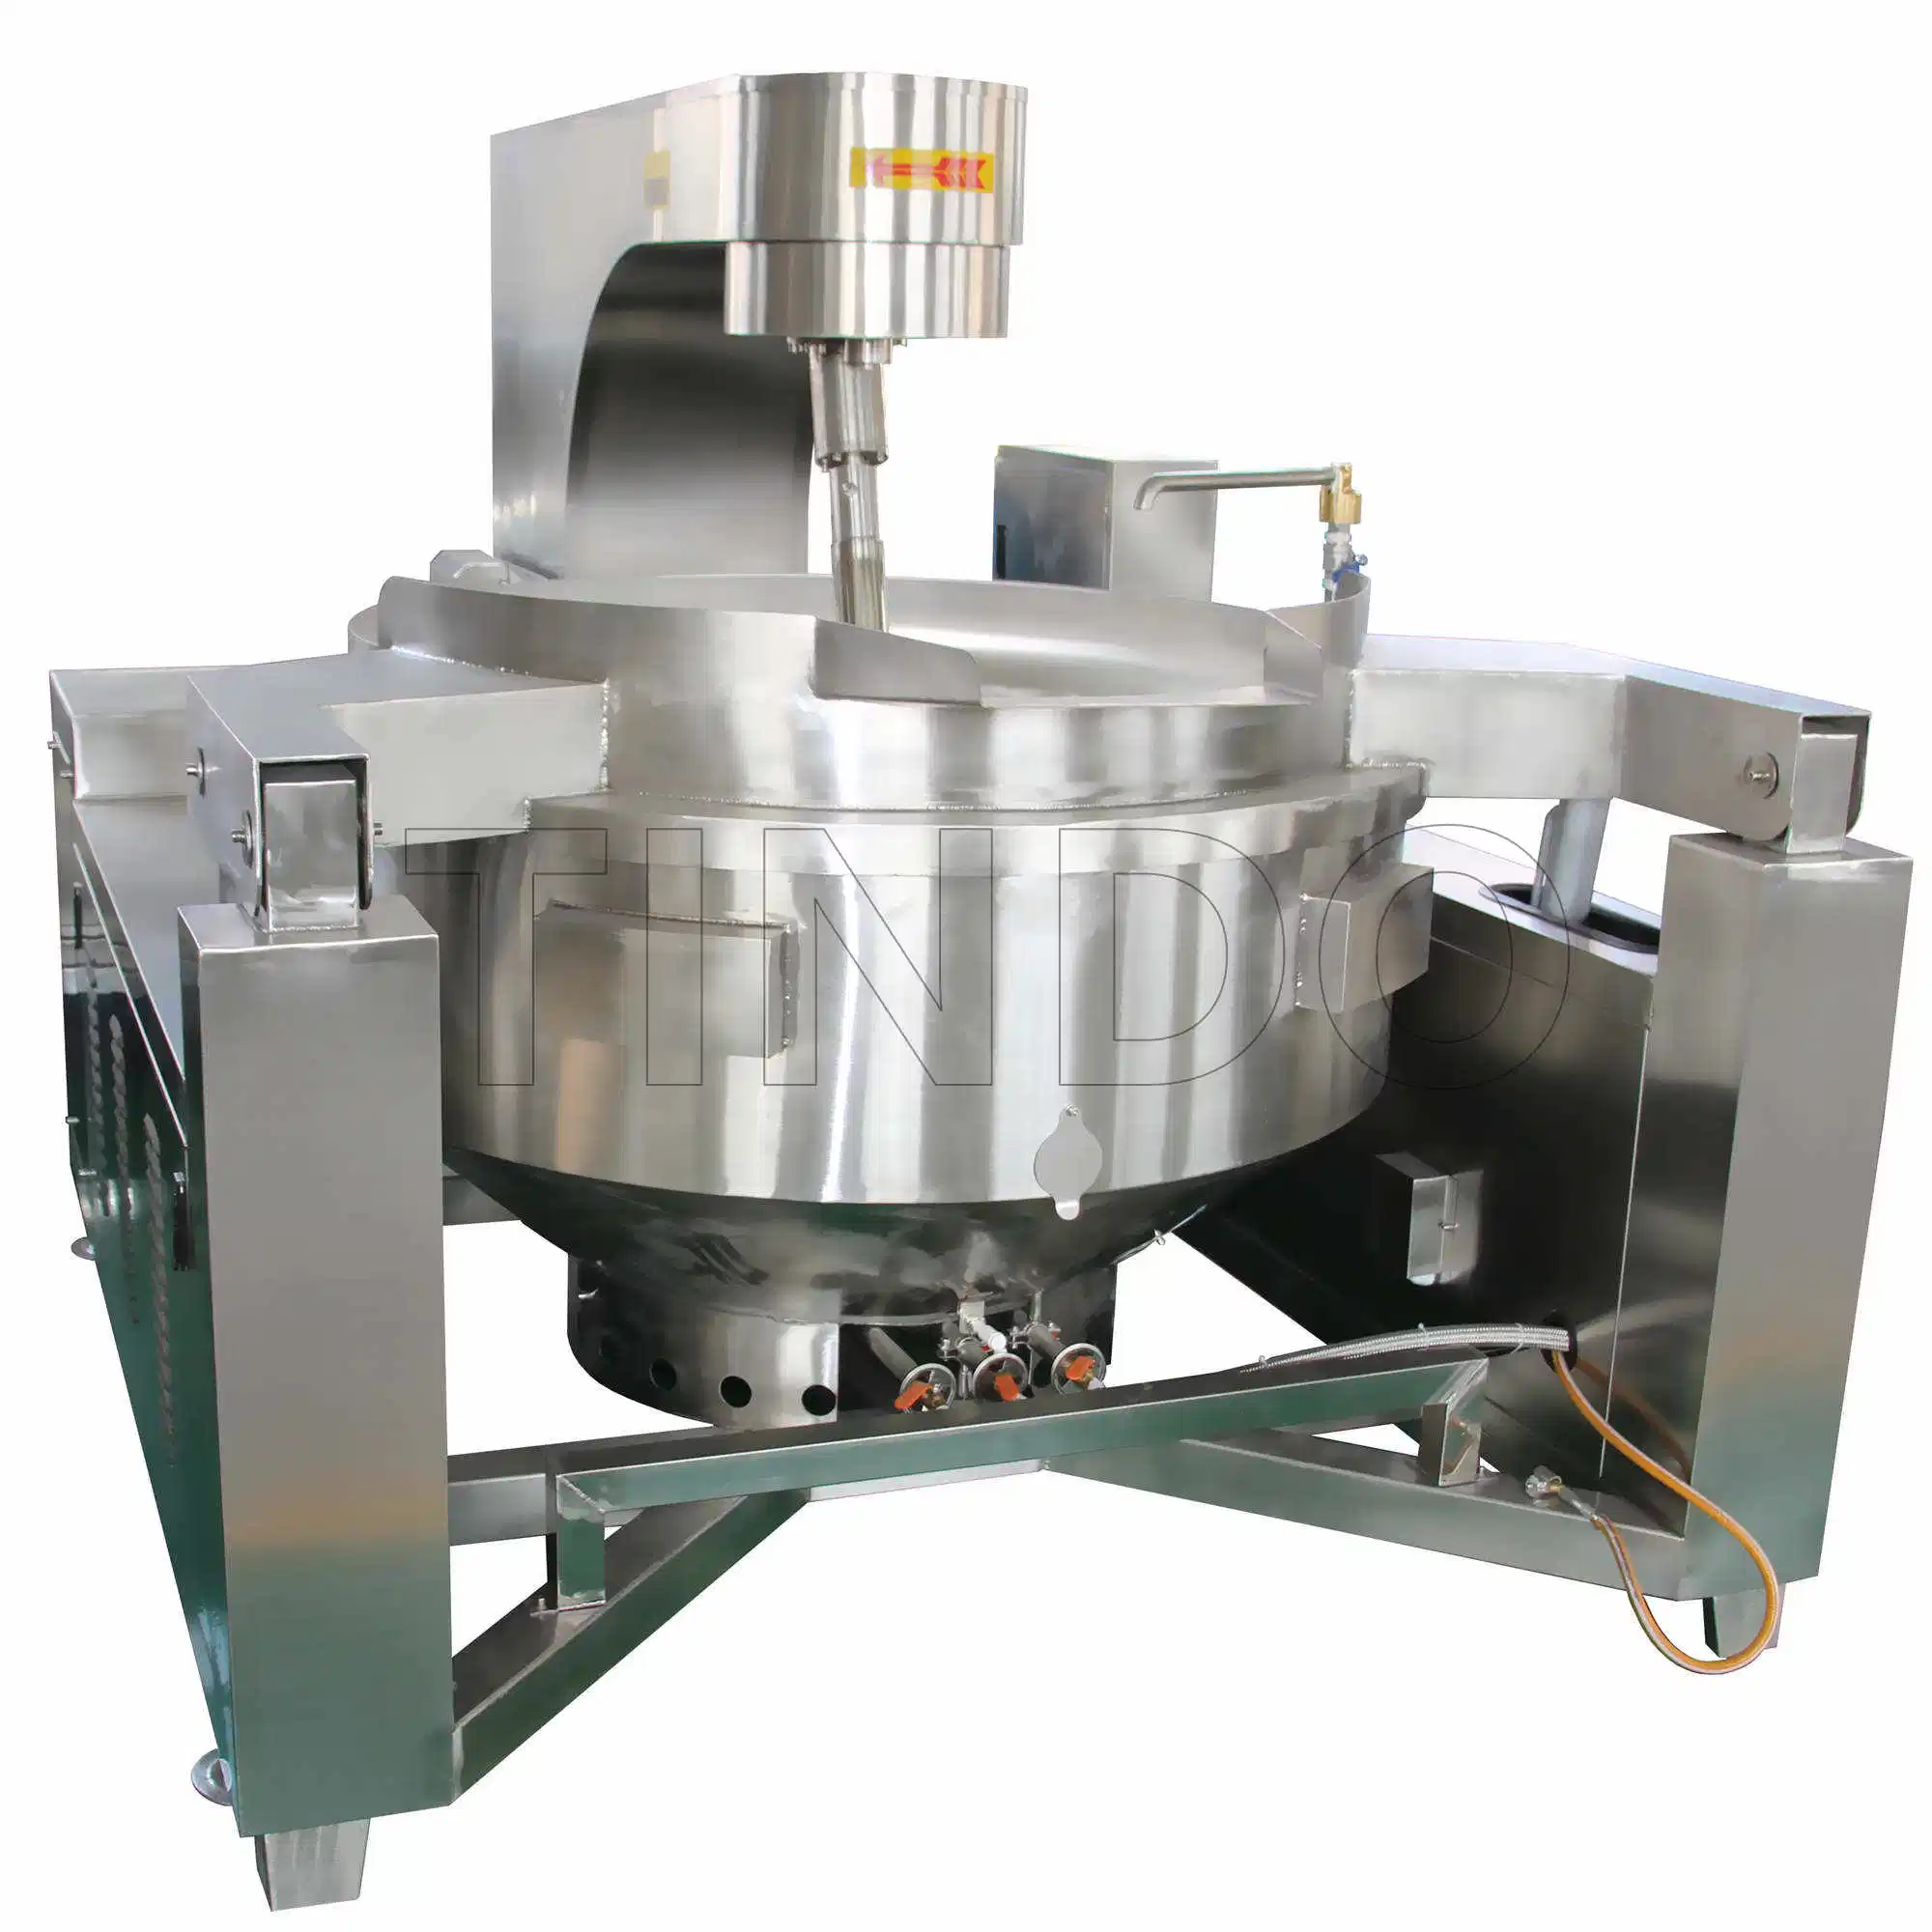 Stainless Steel 50L/100L/200L/300L/400L/500L/600L Food Mixing Cooking Jacket Kettle with Agitator Industrial Porridge Soup Boiler